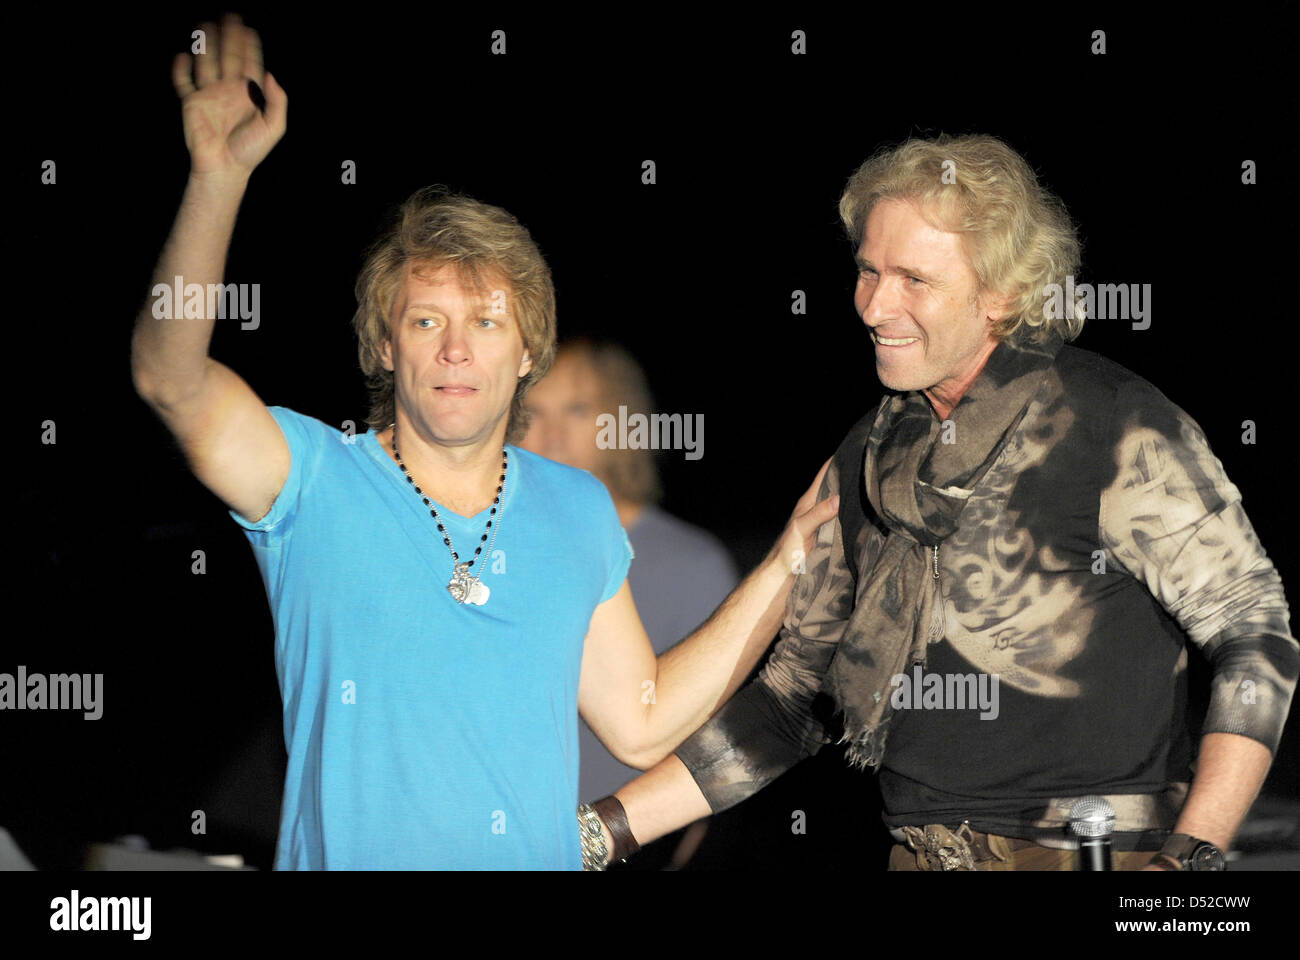 US rock band Bon Jovi with lead singer Jon Bon Jovi perform in Cologne, Germany, 04 November 2010. Photo: JOERG CARSTENSEN Stock Photo